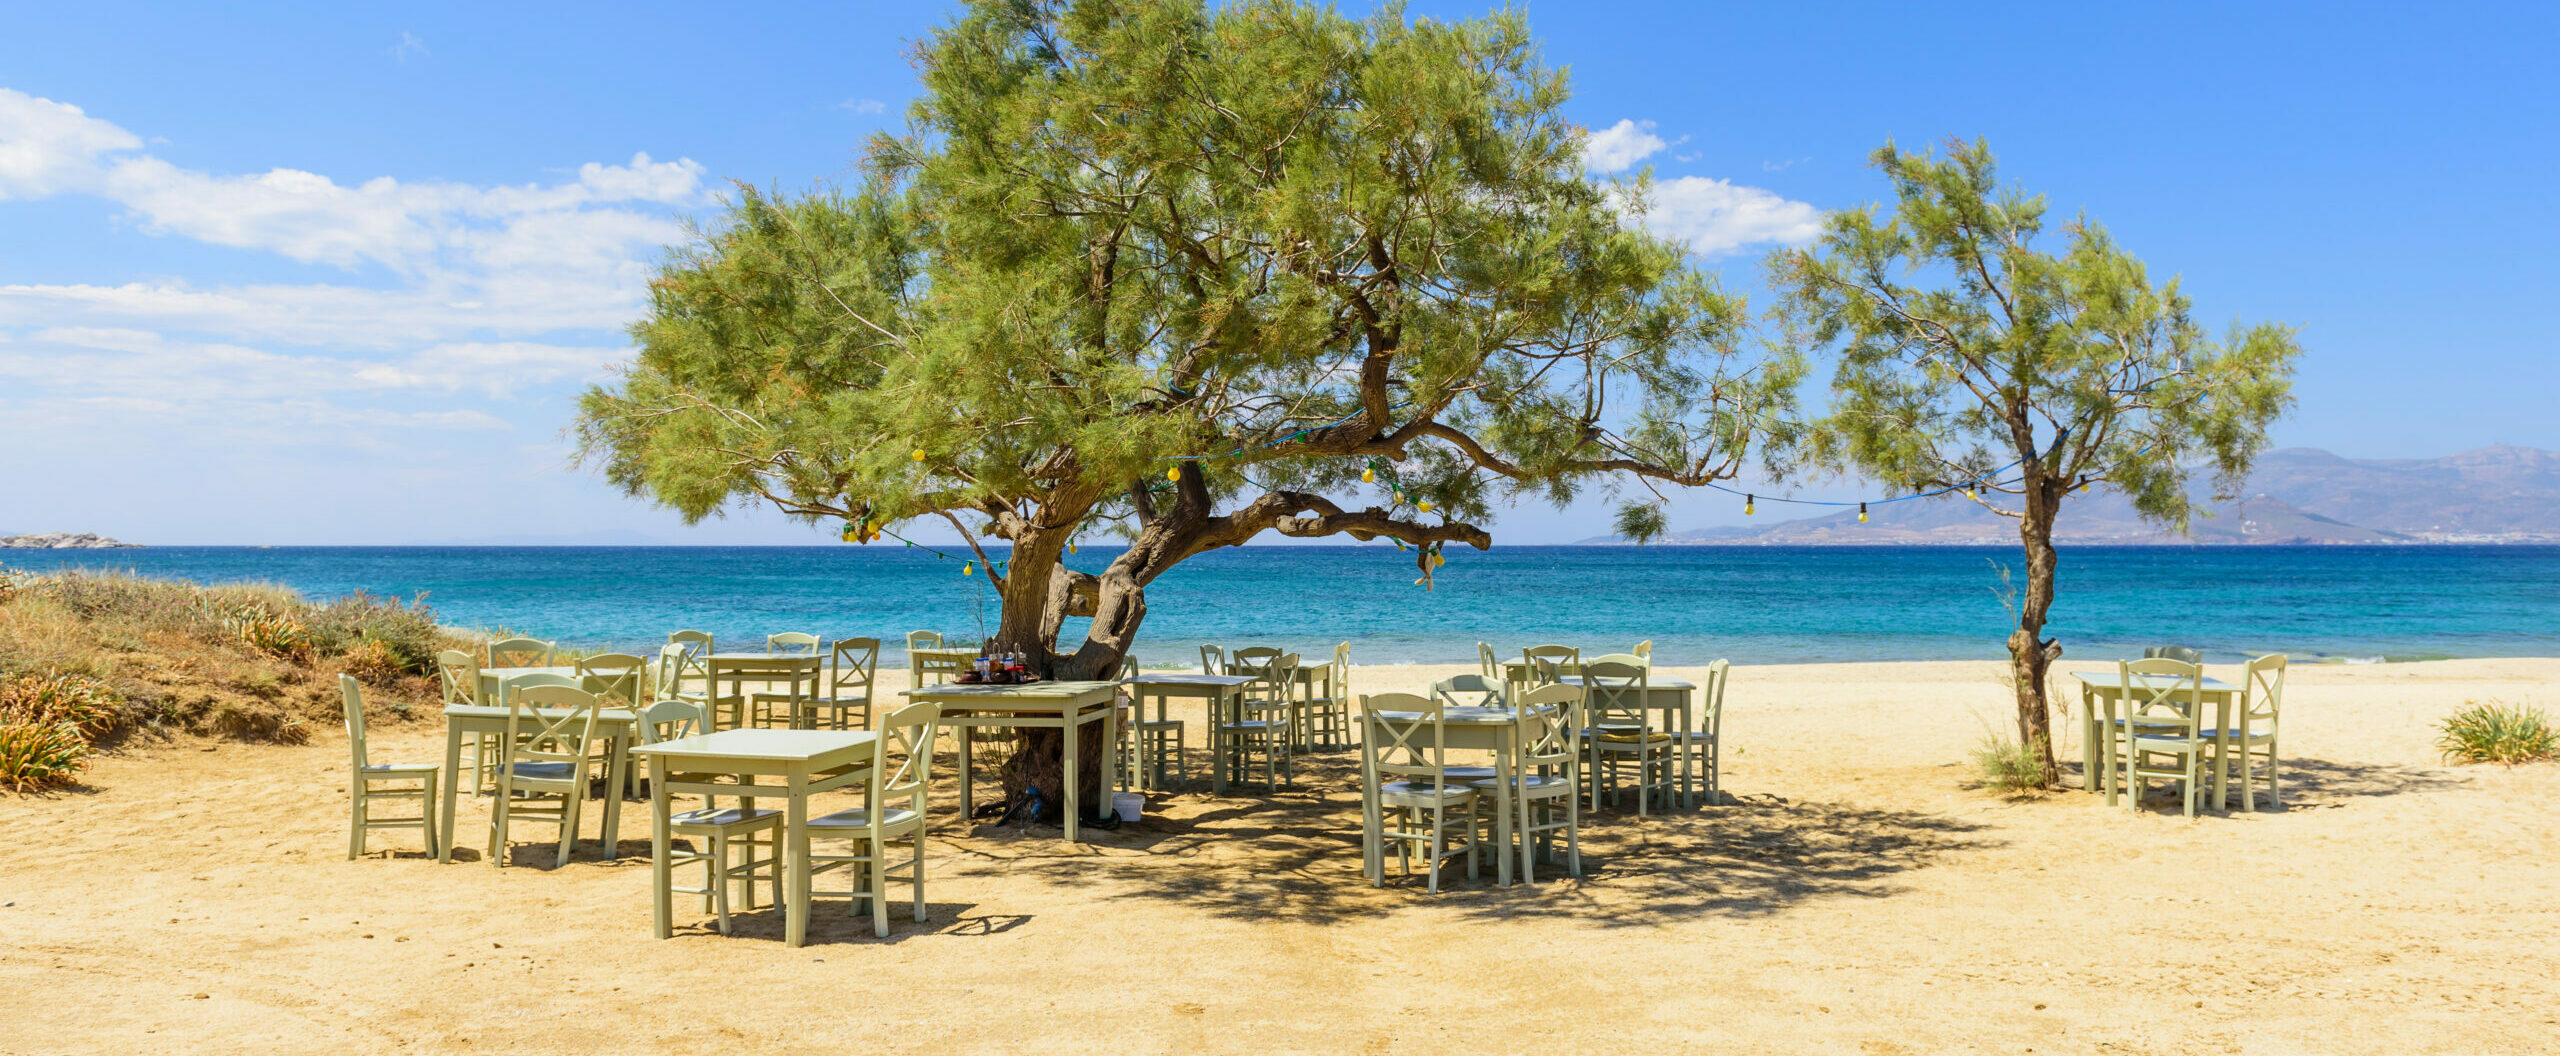 Naxiotikos Kalogeros (the Monk of Naxos) is the secret of the gastronomy of the island